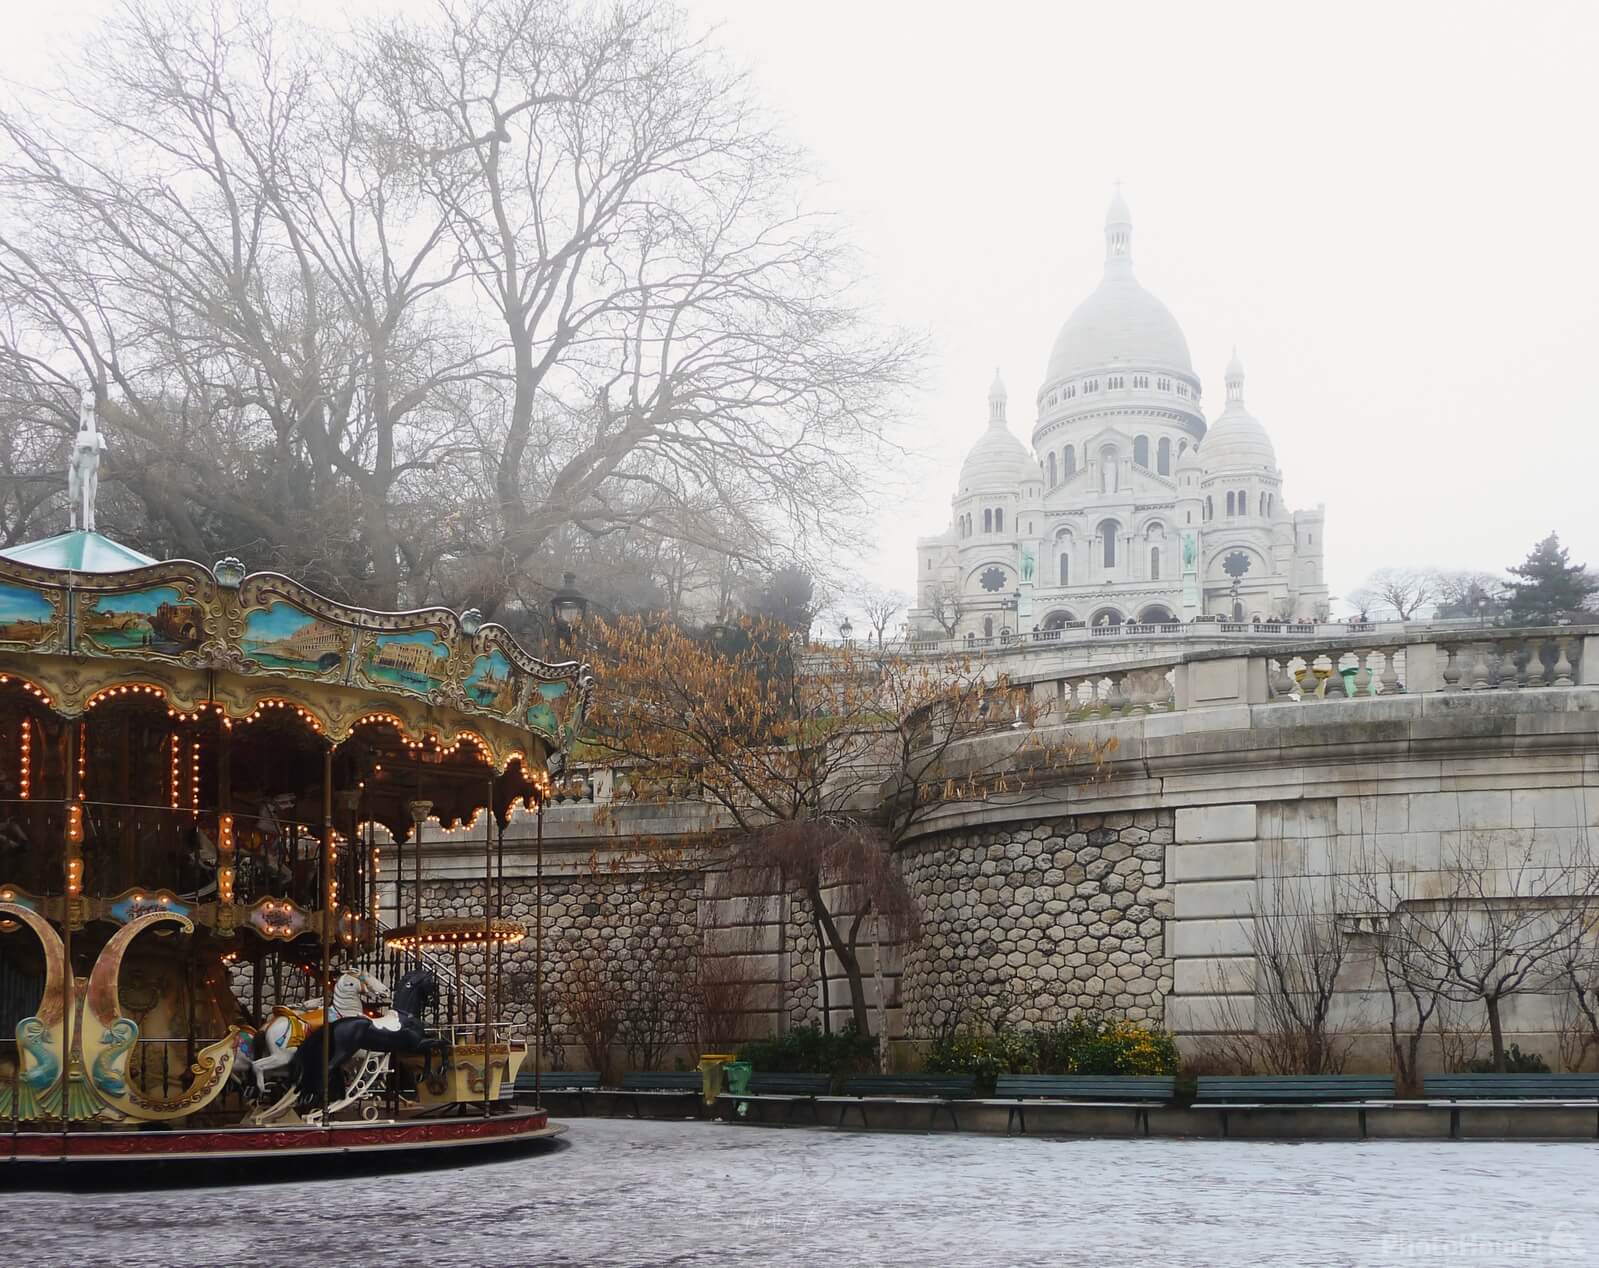 Image of Sacre Coeur, Paris by Mathew Browne